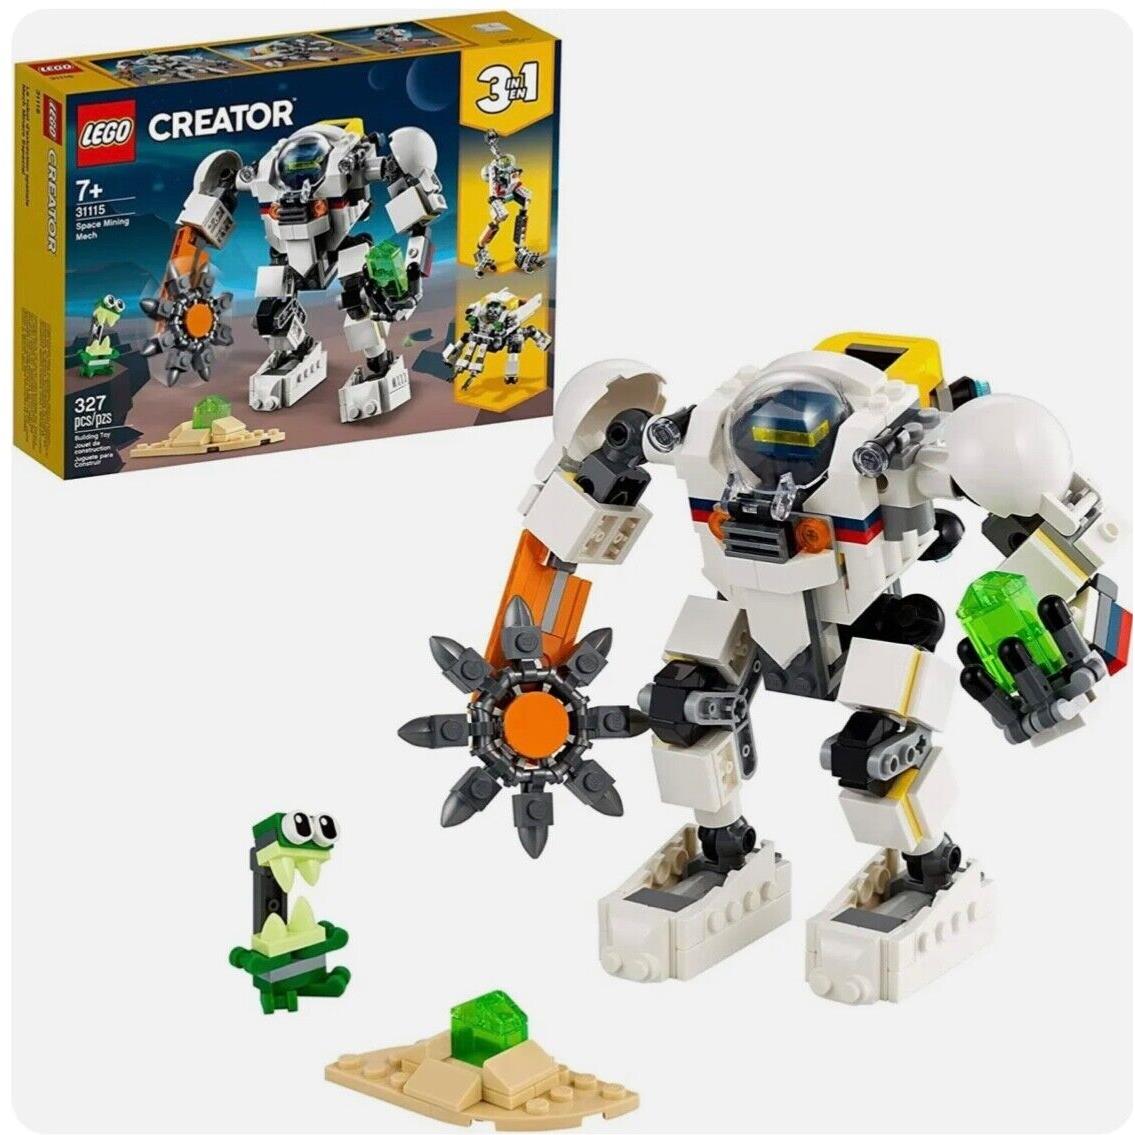 31115 Space Mining Mech Lego Creator 3 in 1 Legos Set Robot Alien